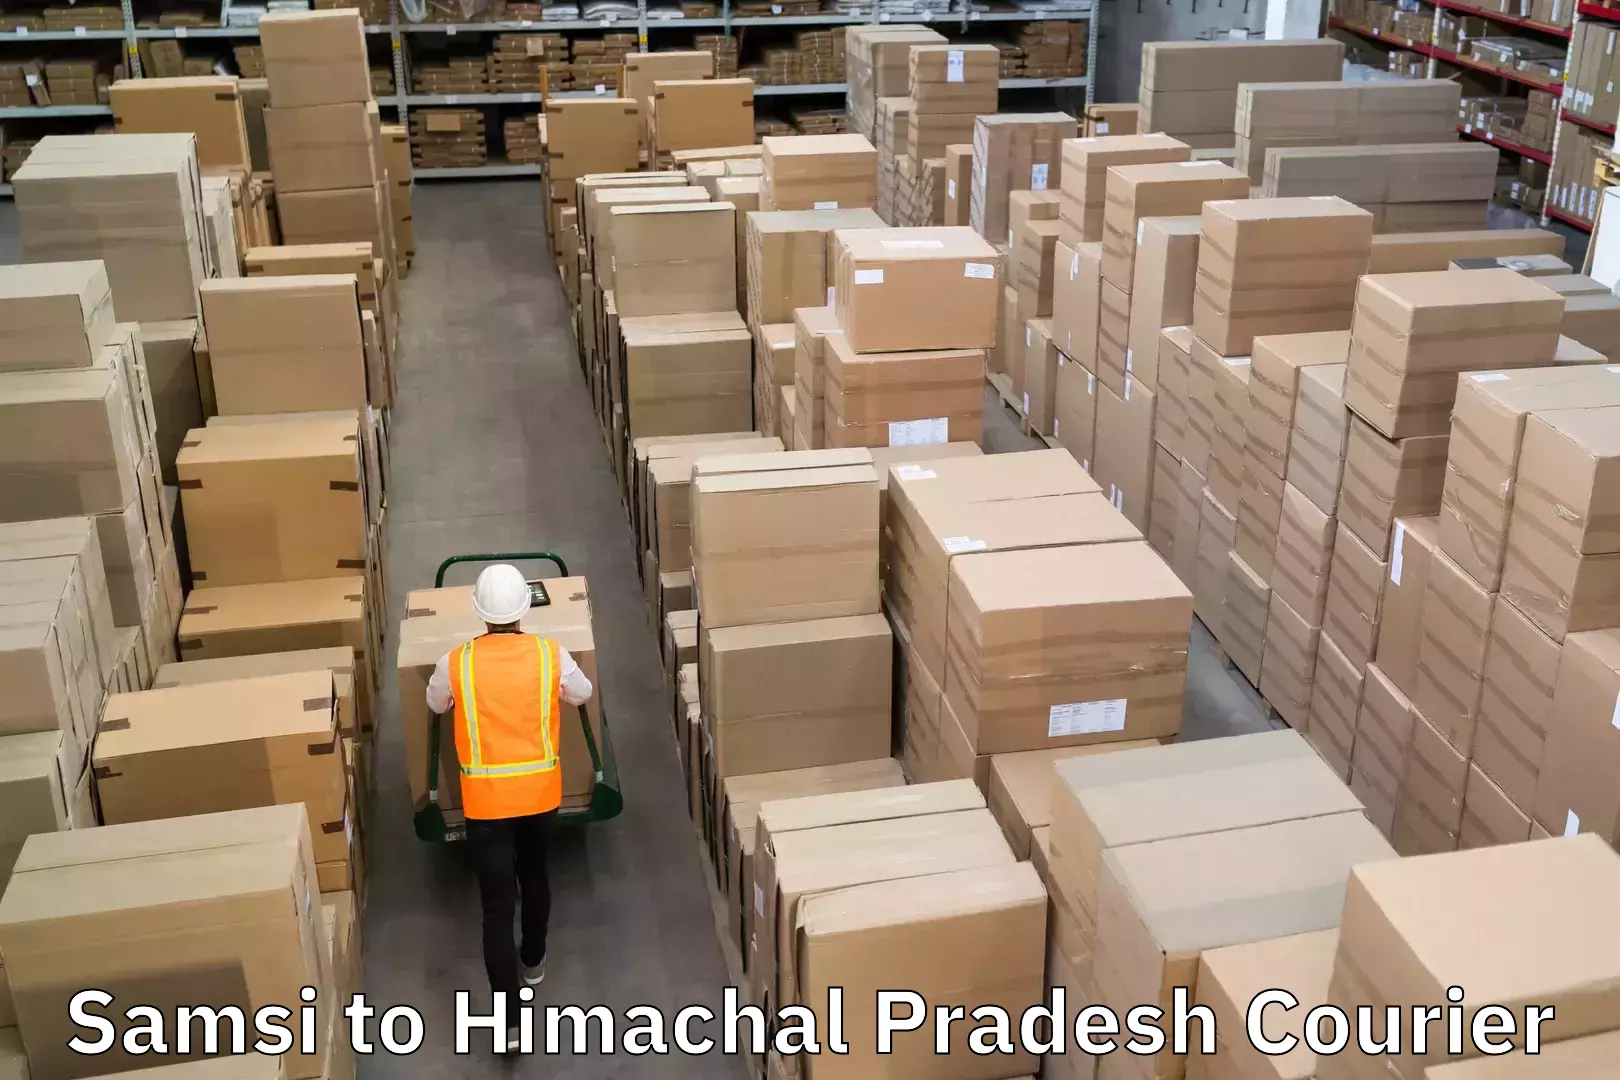 International courier networks Samsi to Himachal Pradesh